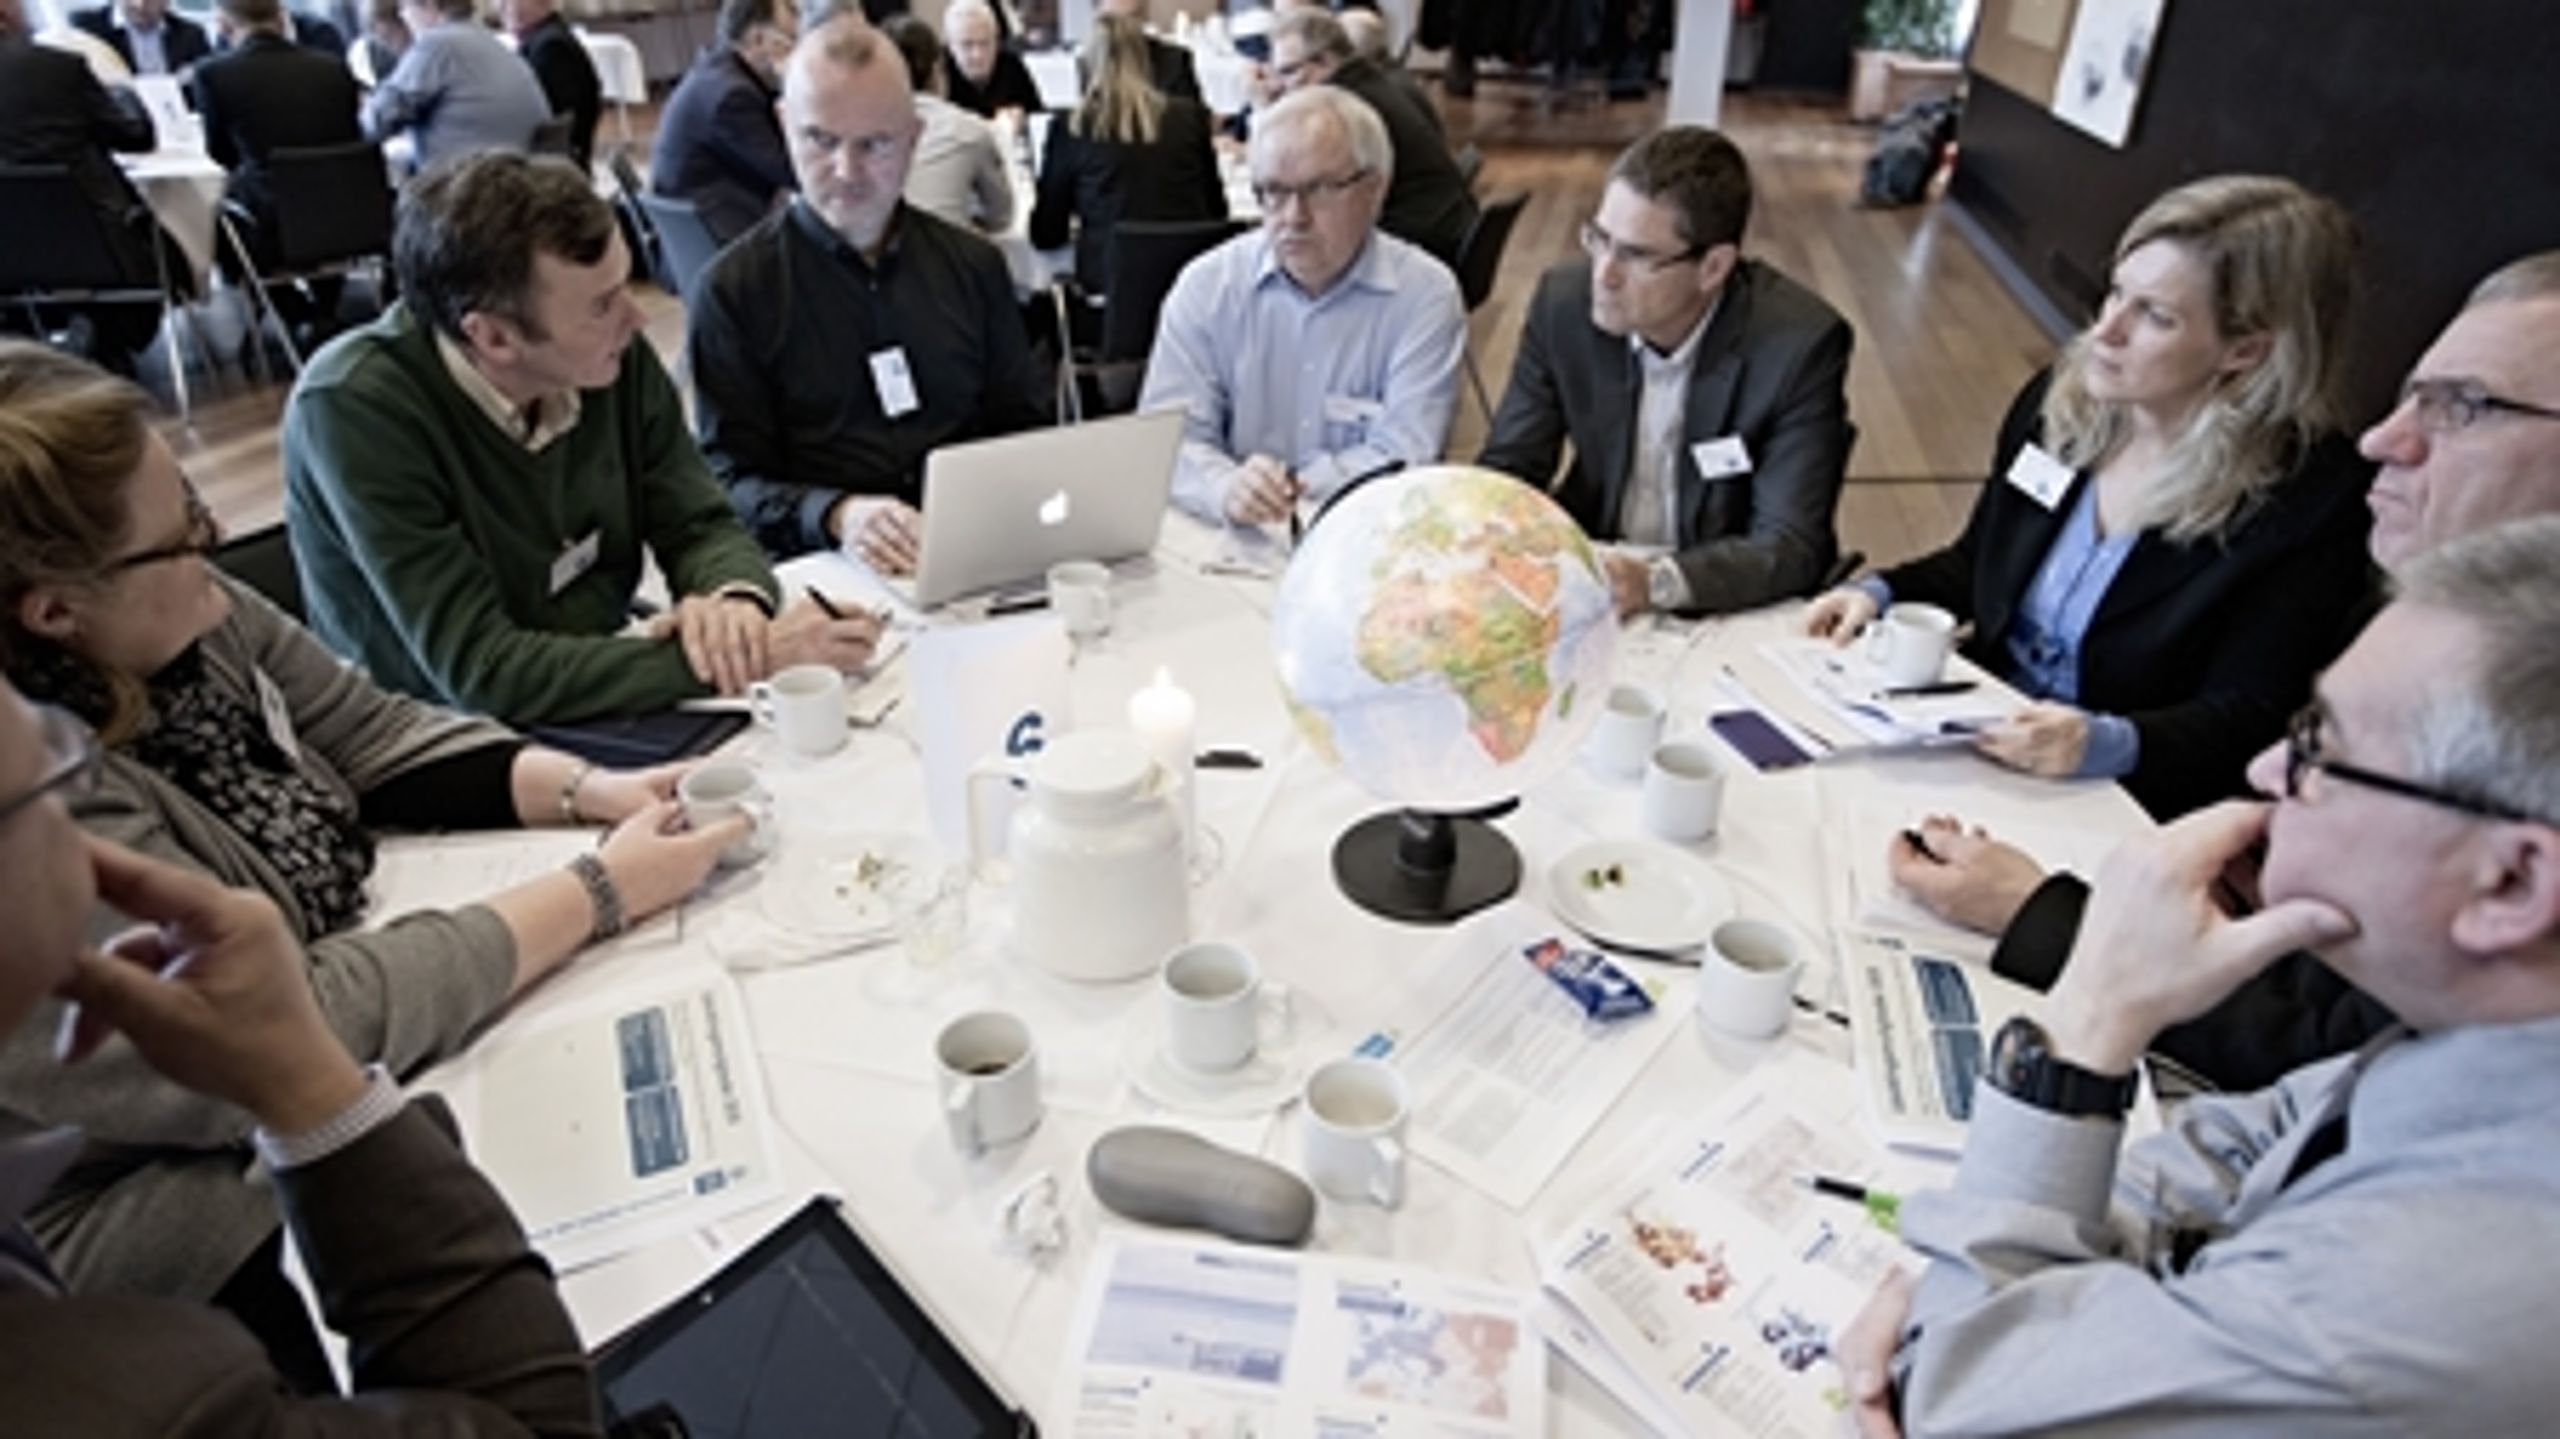 Borgmestre, eksperter og forsyningsfolk drøfter fremtidens energiplanlægning på Hotel Comwell i Roskilde.